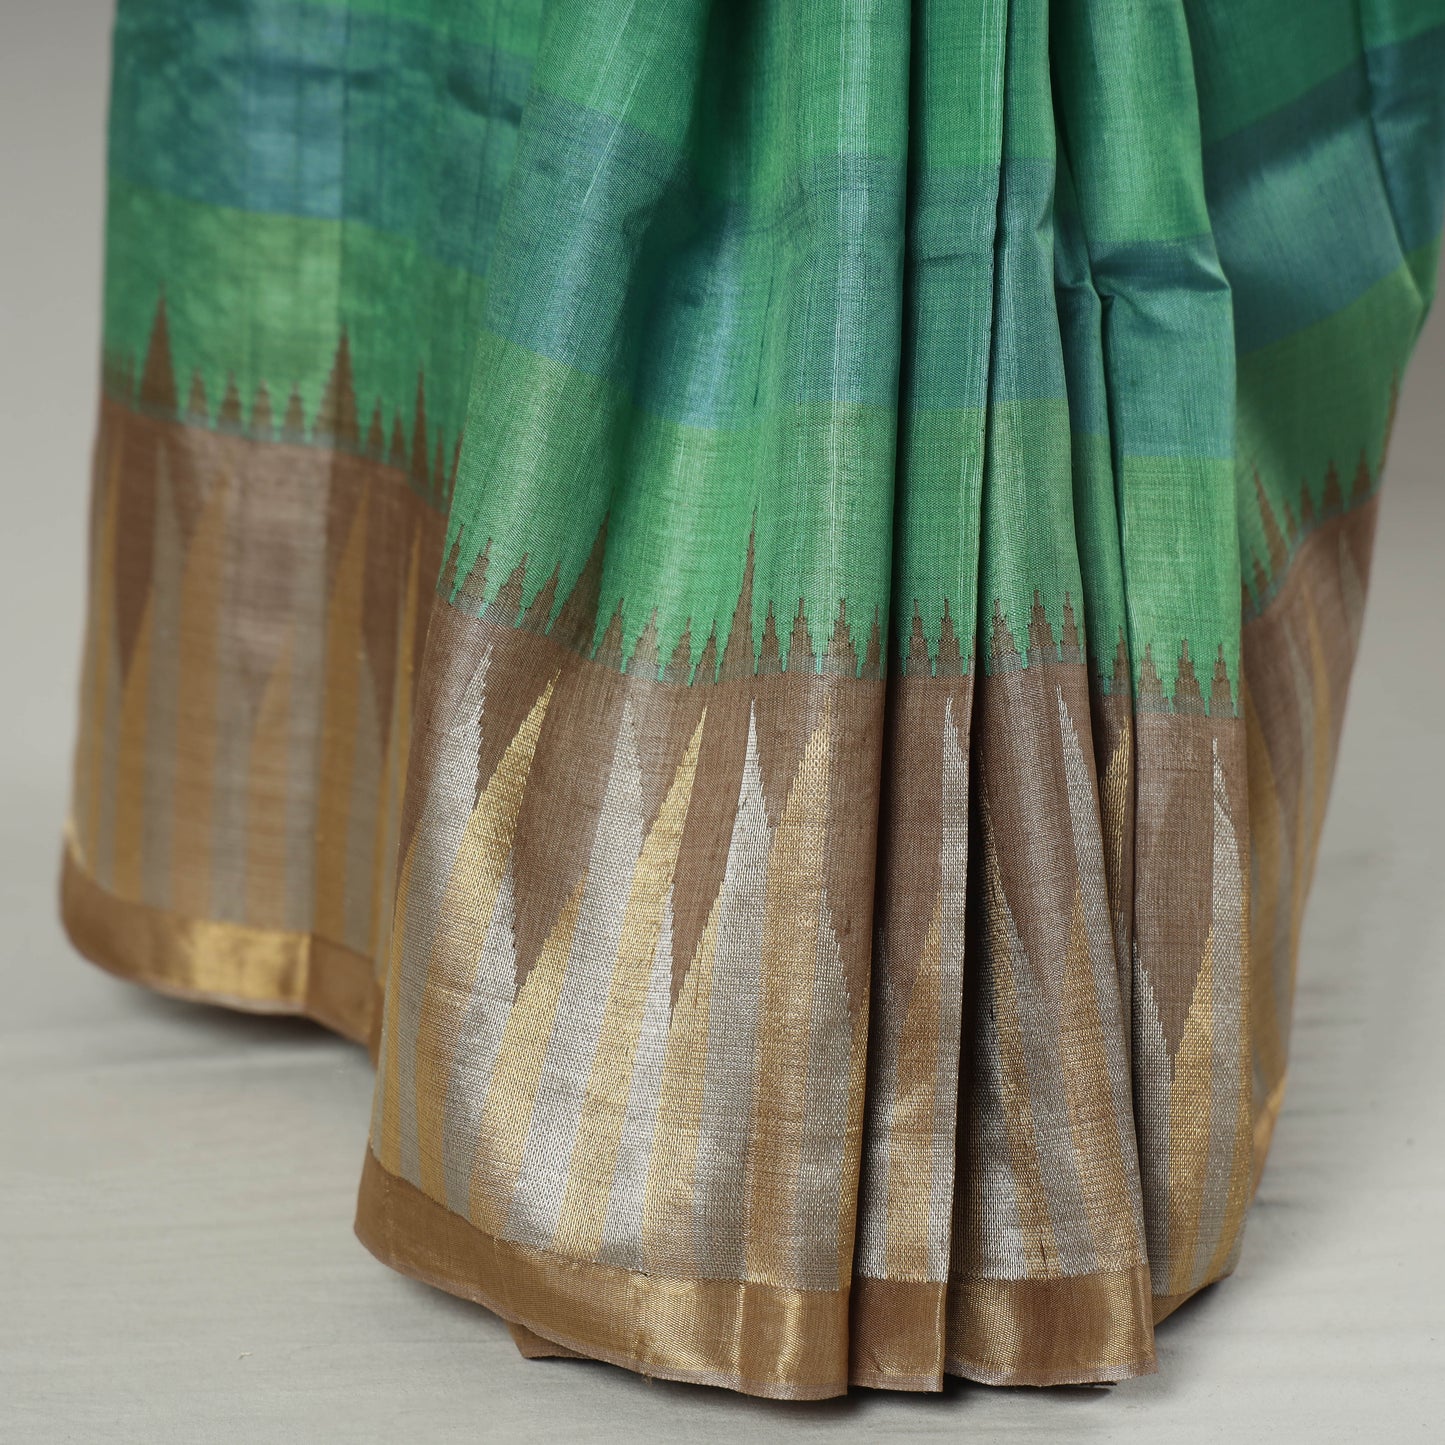 Green - Pure Kosa Tussar Silk Pure Handloom Saree with Temple Woven Border